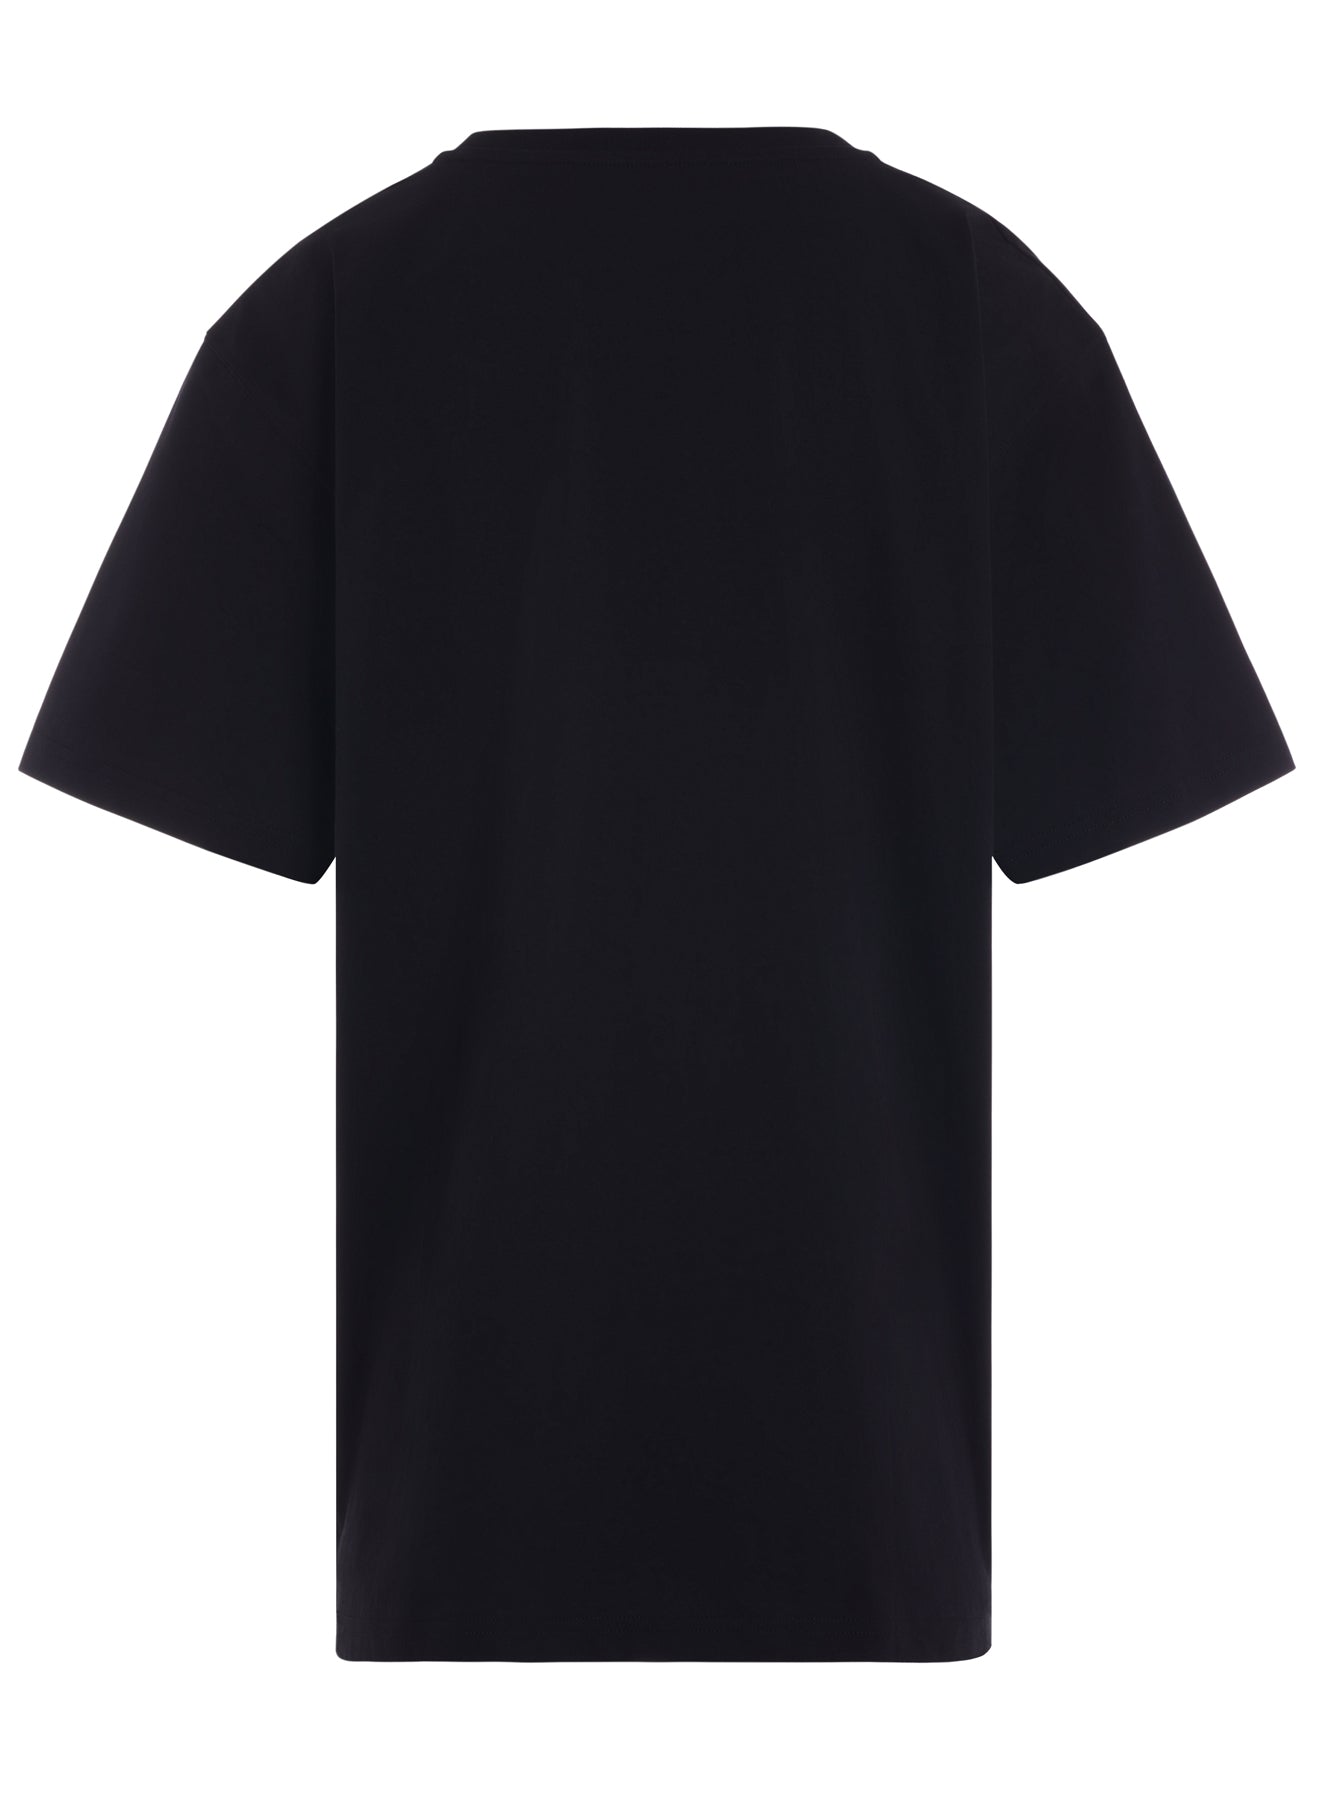 black fembot corset t-shirt